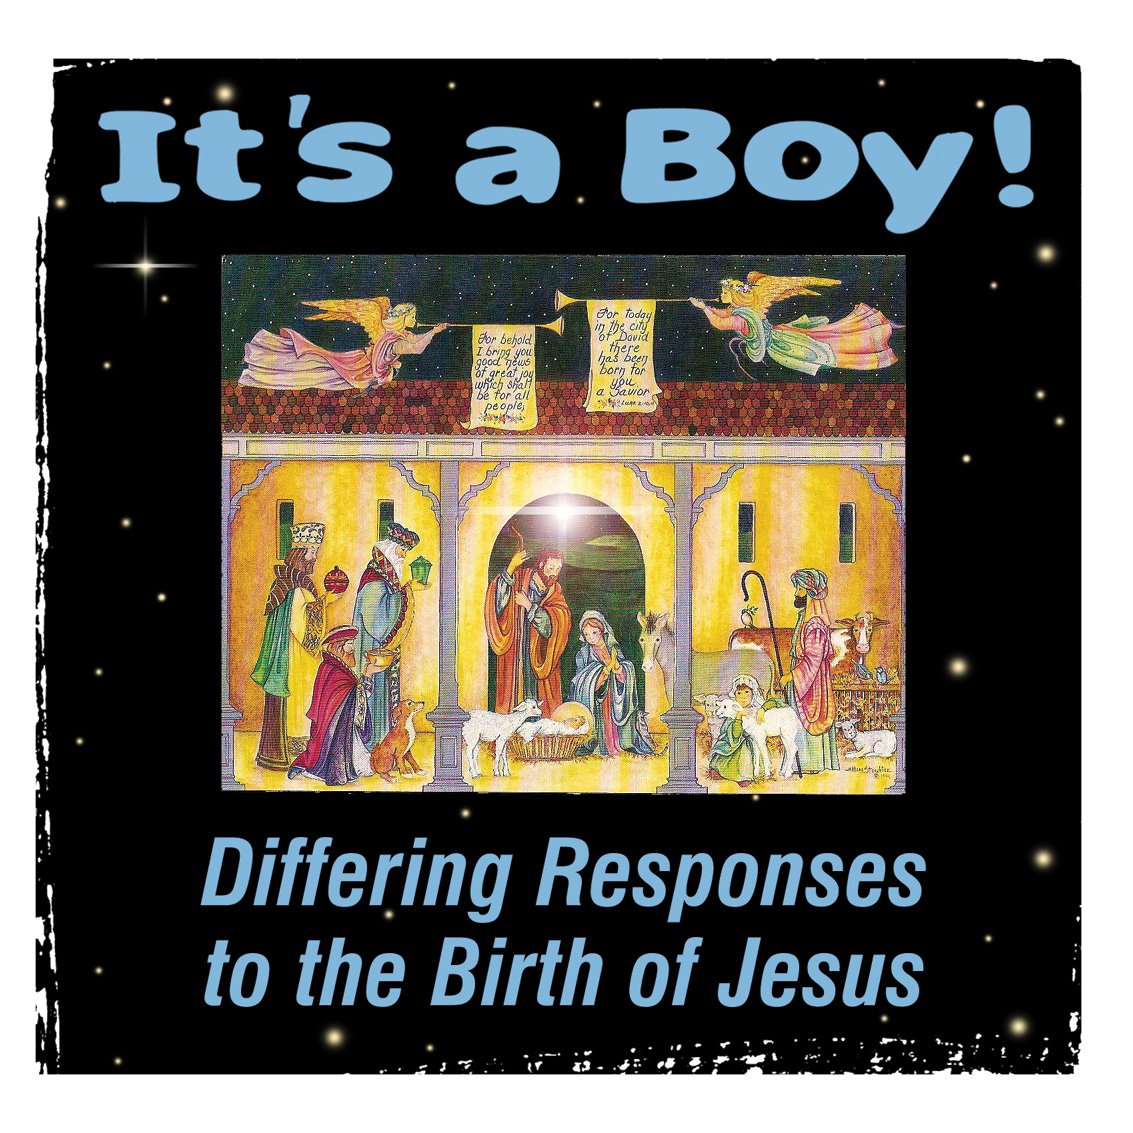 The Shepherd's Response to the Birth of Jesus Christ